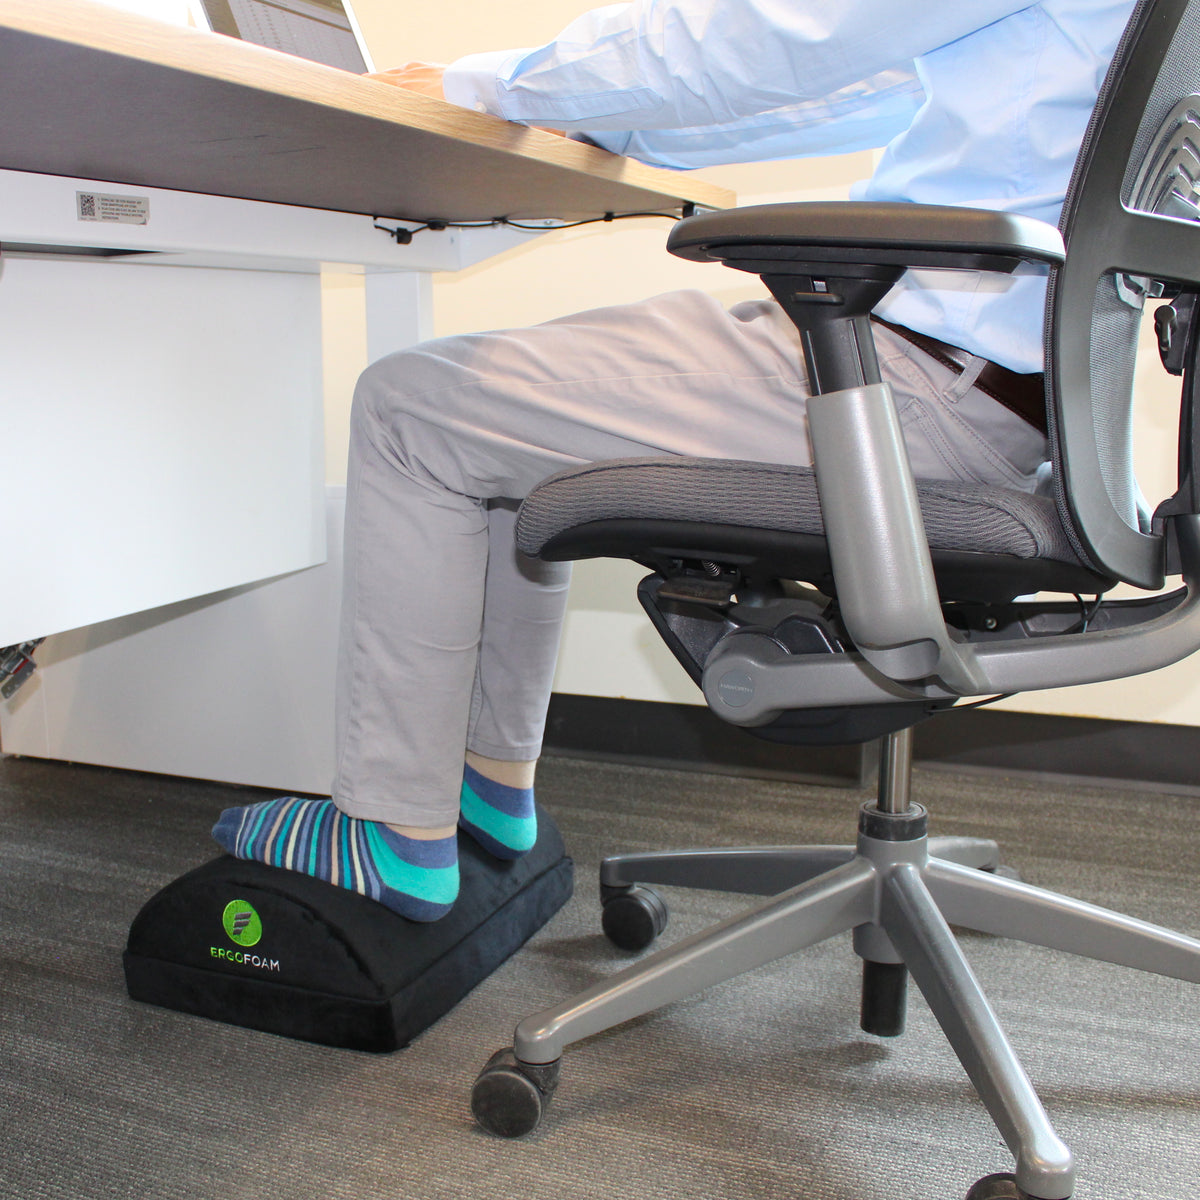 Key Benefits of Using an Ergonomic Footrest Under Your Desk – ErgoFoam